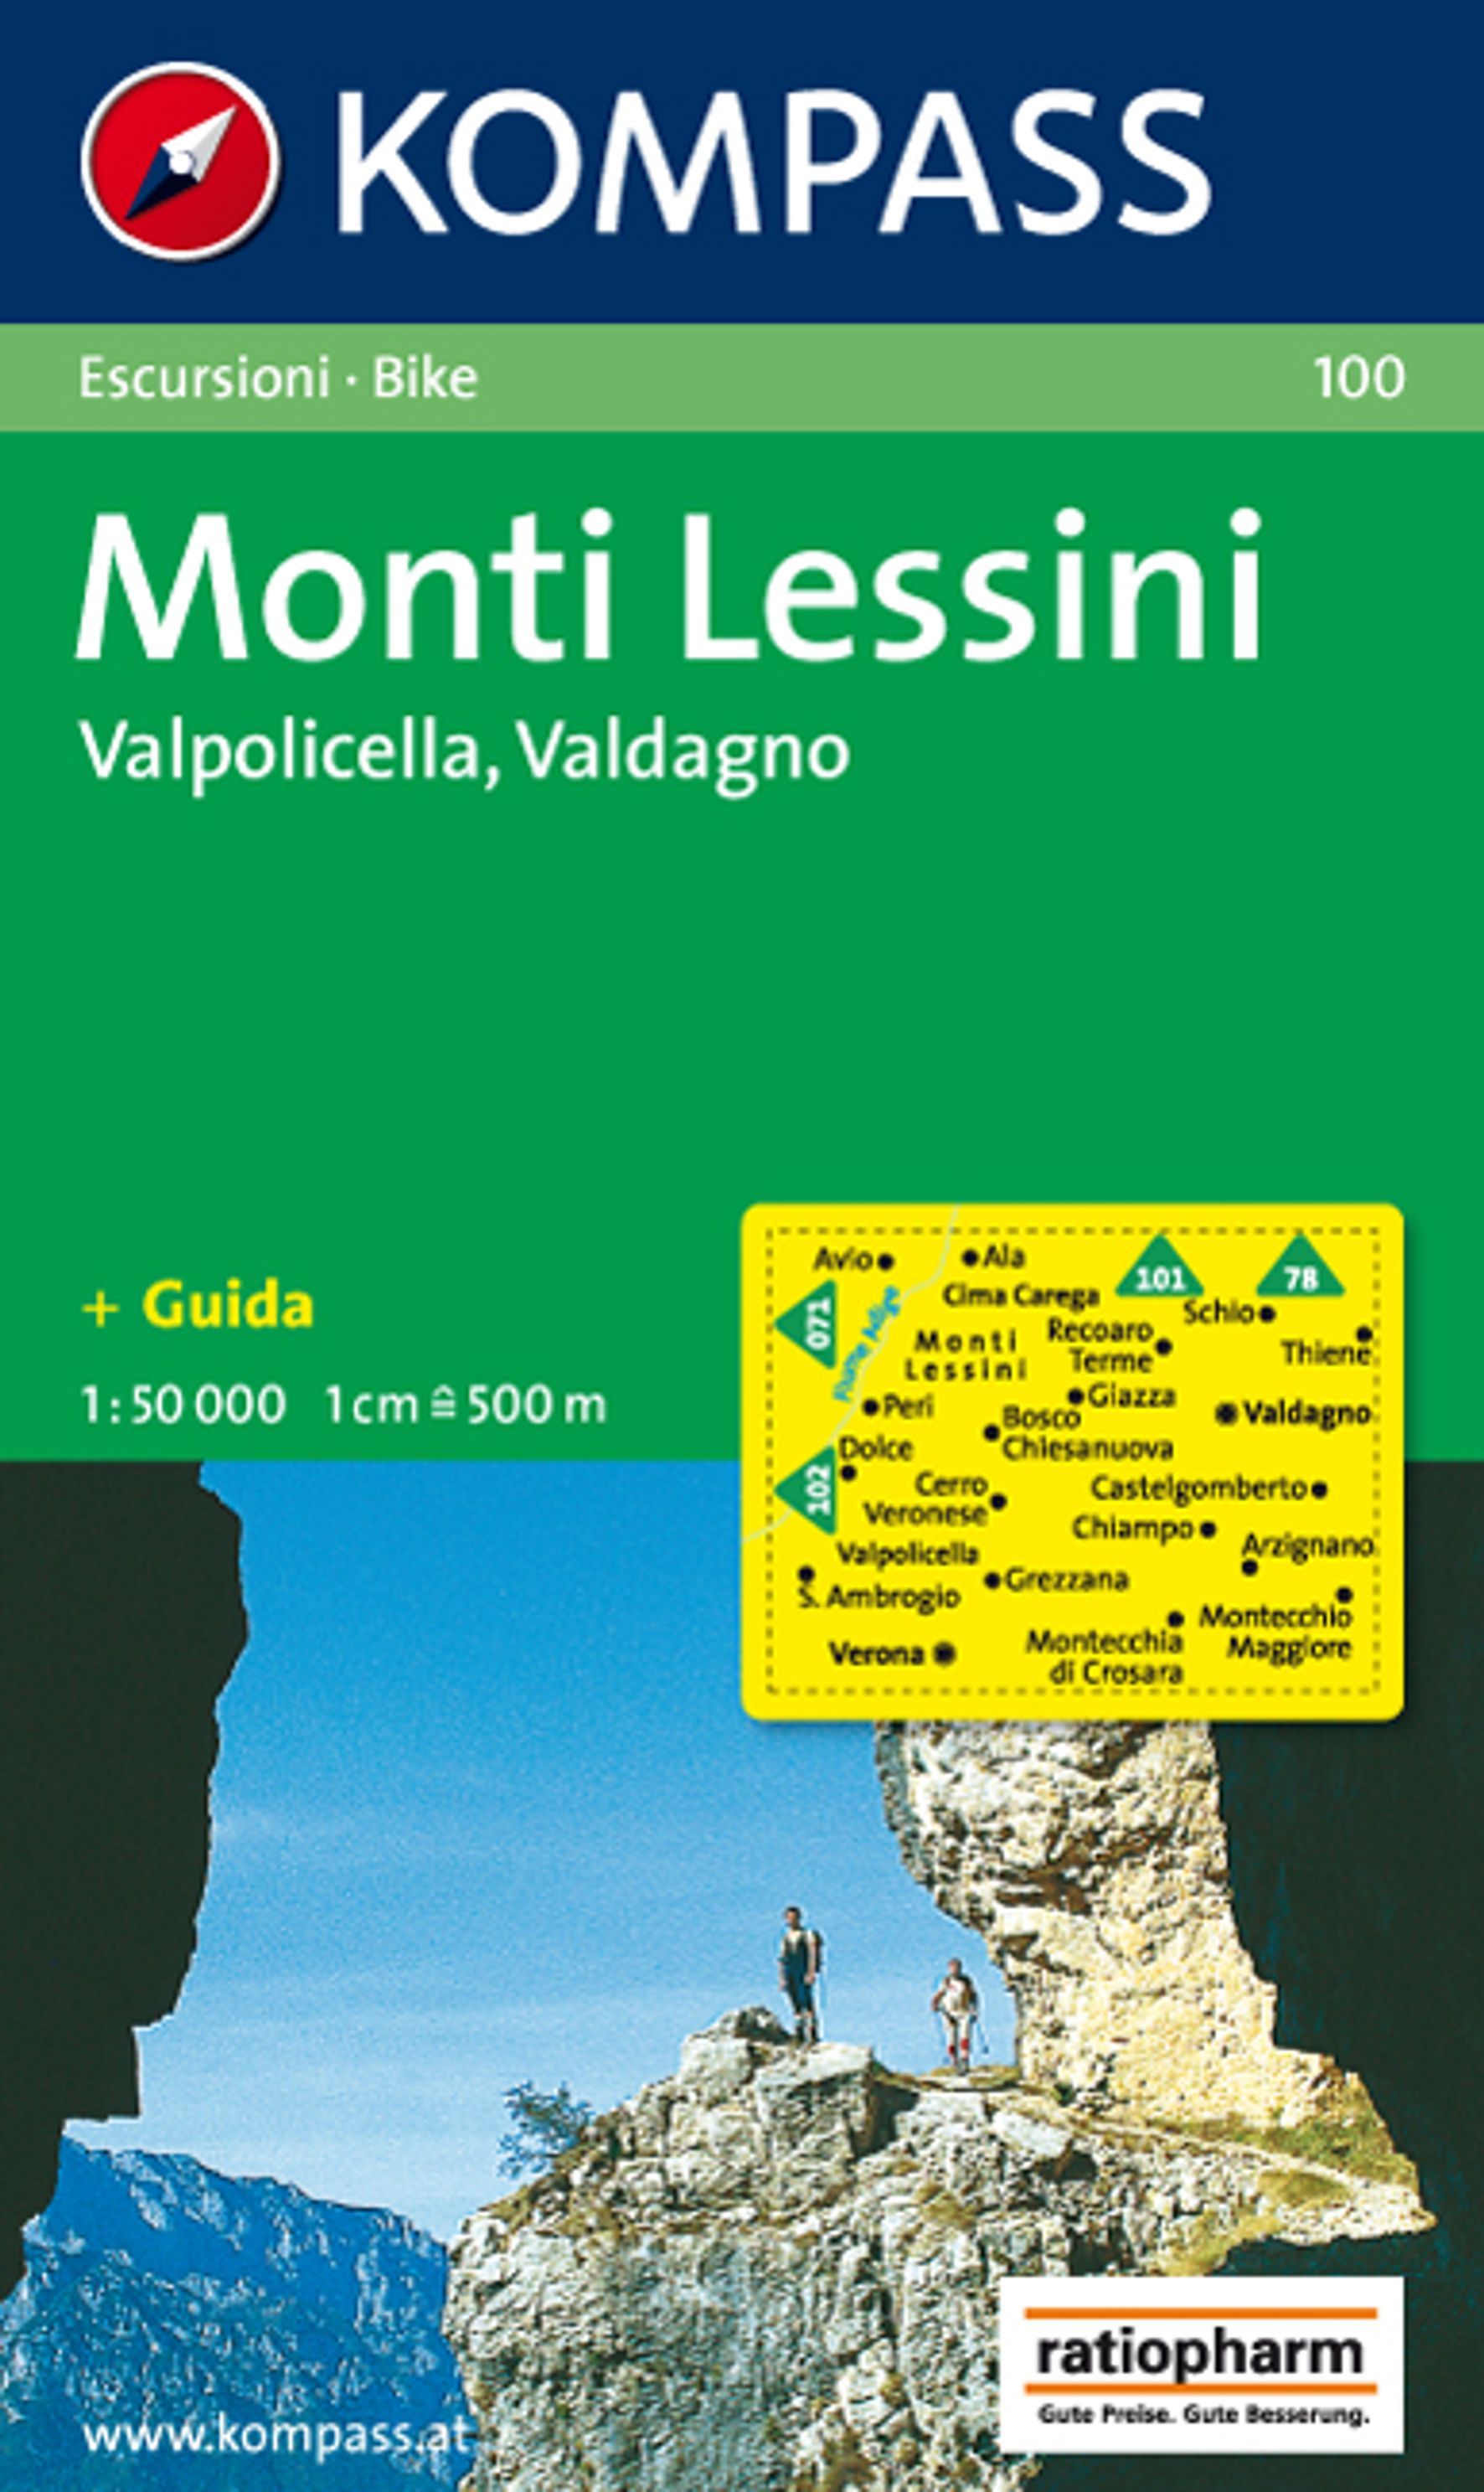 MAIRDUMONT KOMPASS Wanderkarte Monti Lessini - Valpolicella - Valdagno